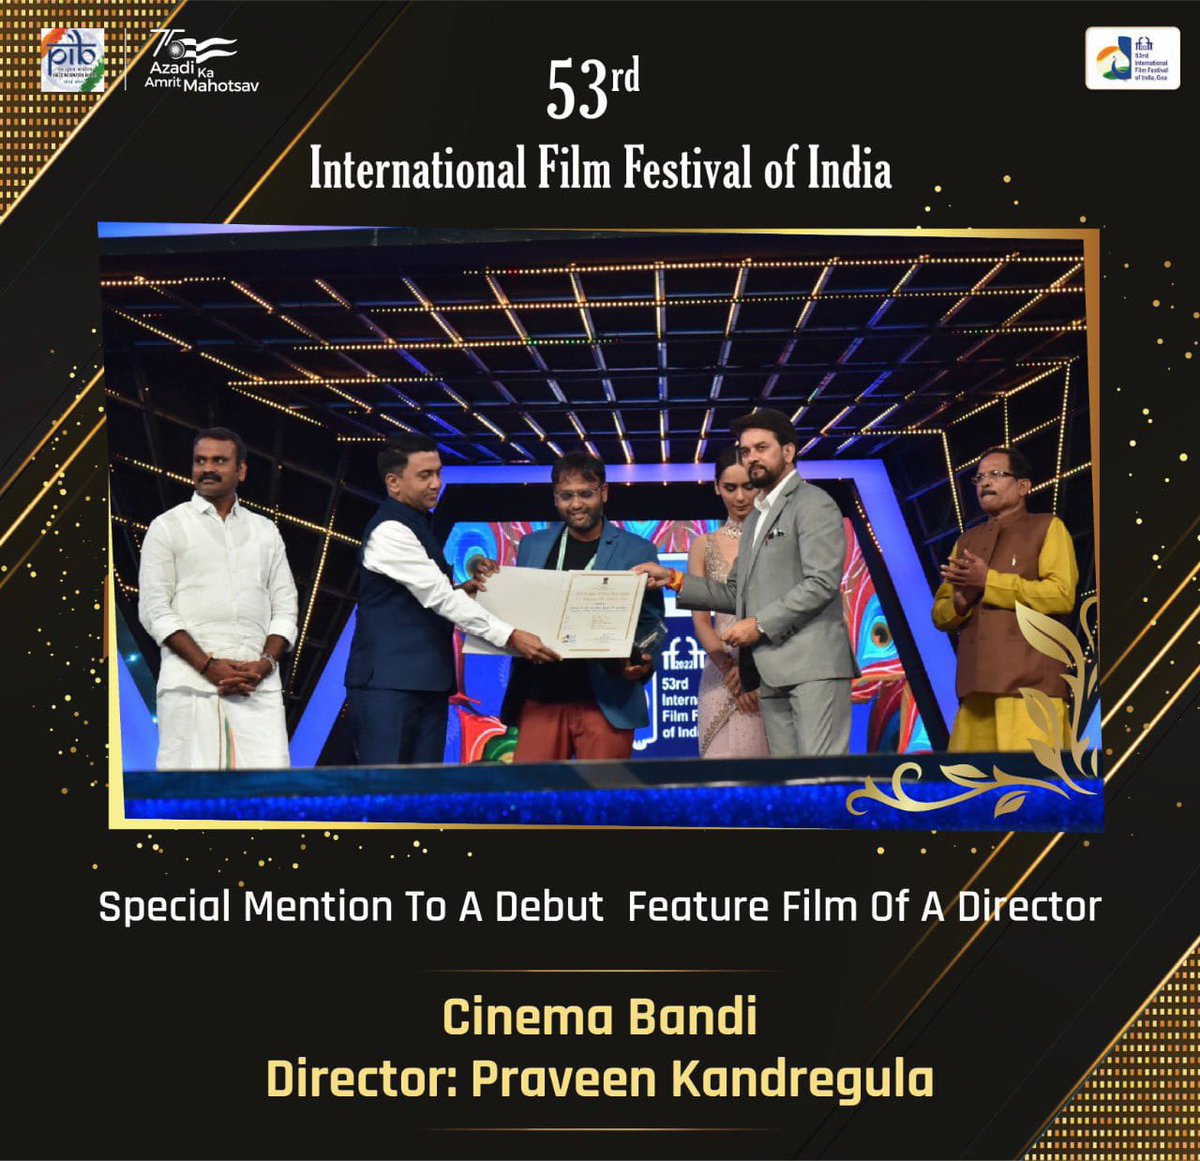 Special mention to a Debutant feature film director award given to @praveen5D for #CinemaBandi @ 53rd International Film Festival of India 👏👏👏👏👏 @rajndk @kpprathyu1 @VasanthMaringa1 @sirishsatyavolu @smayurk @imVdeshK @VaranasiSandee9 @Dharmi_edits @vijaydonkada #IFFI2022